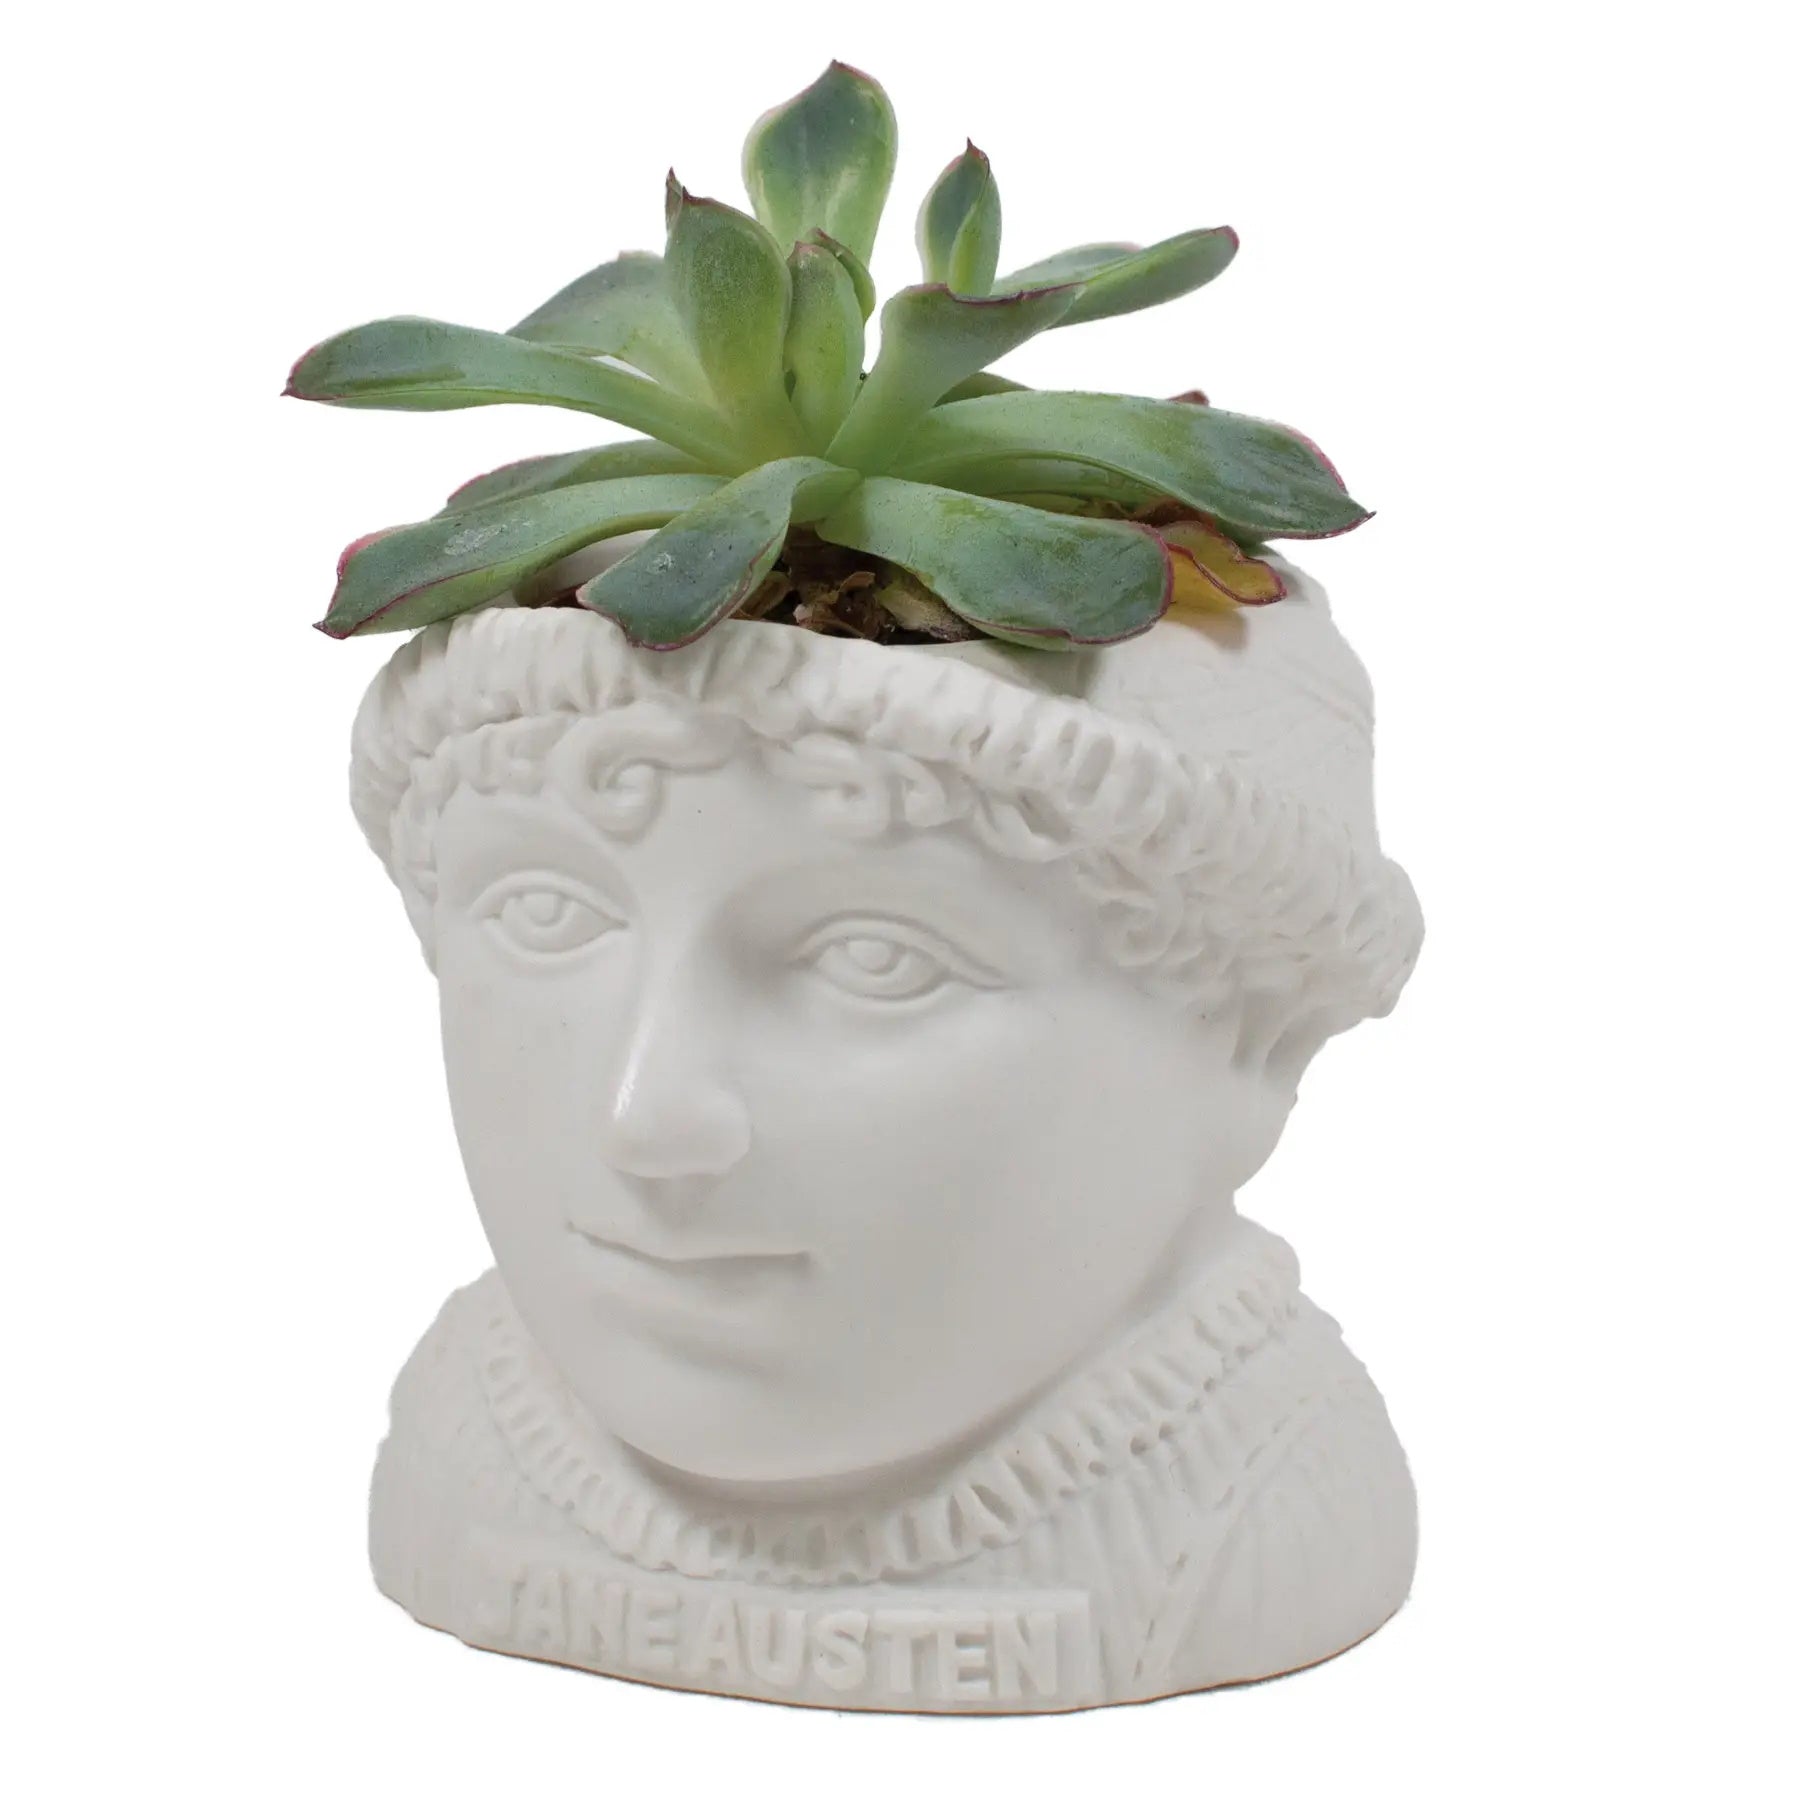 Jane Austen Small Ceramic Planter